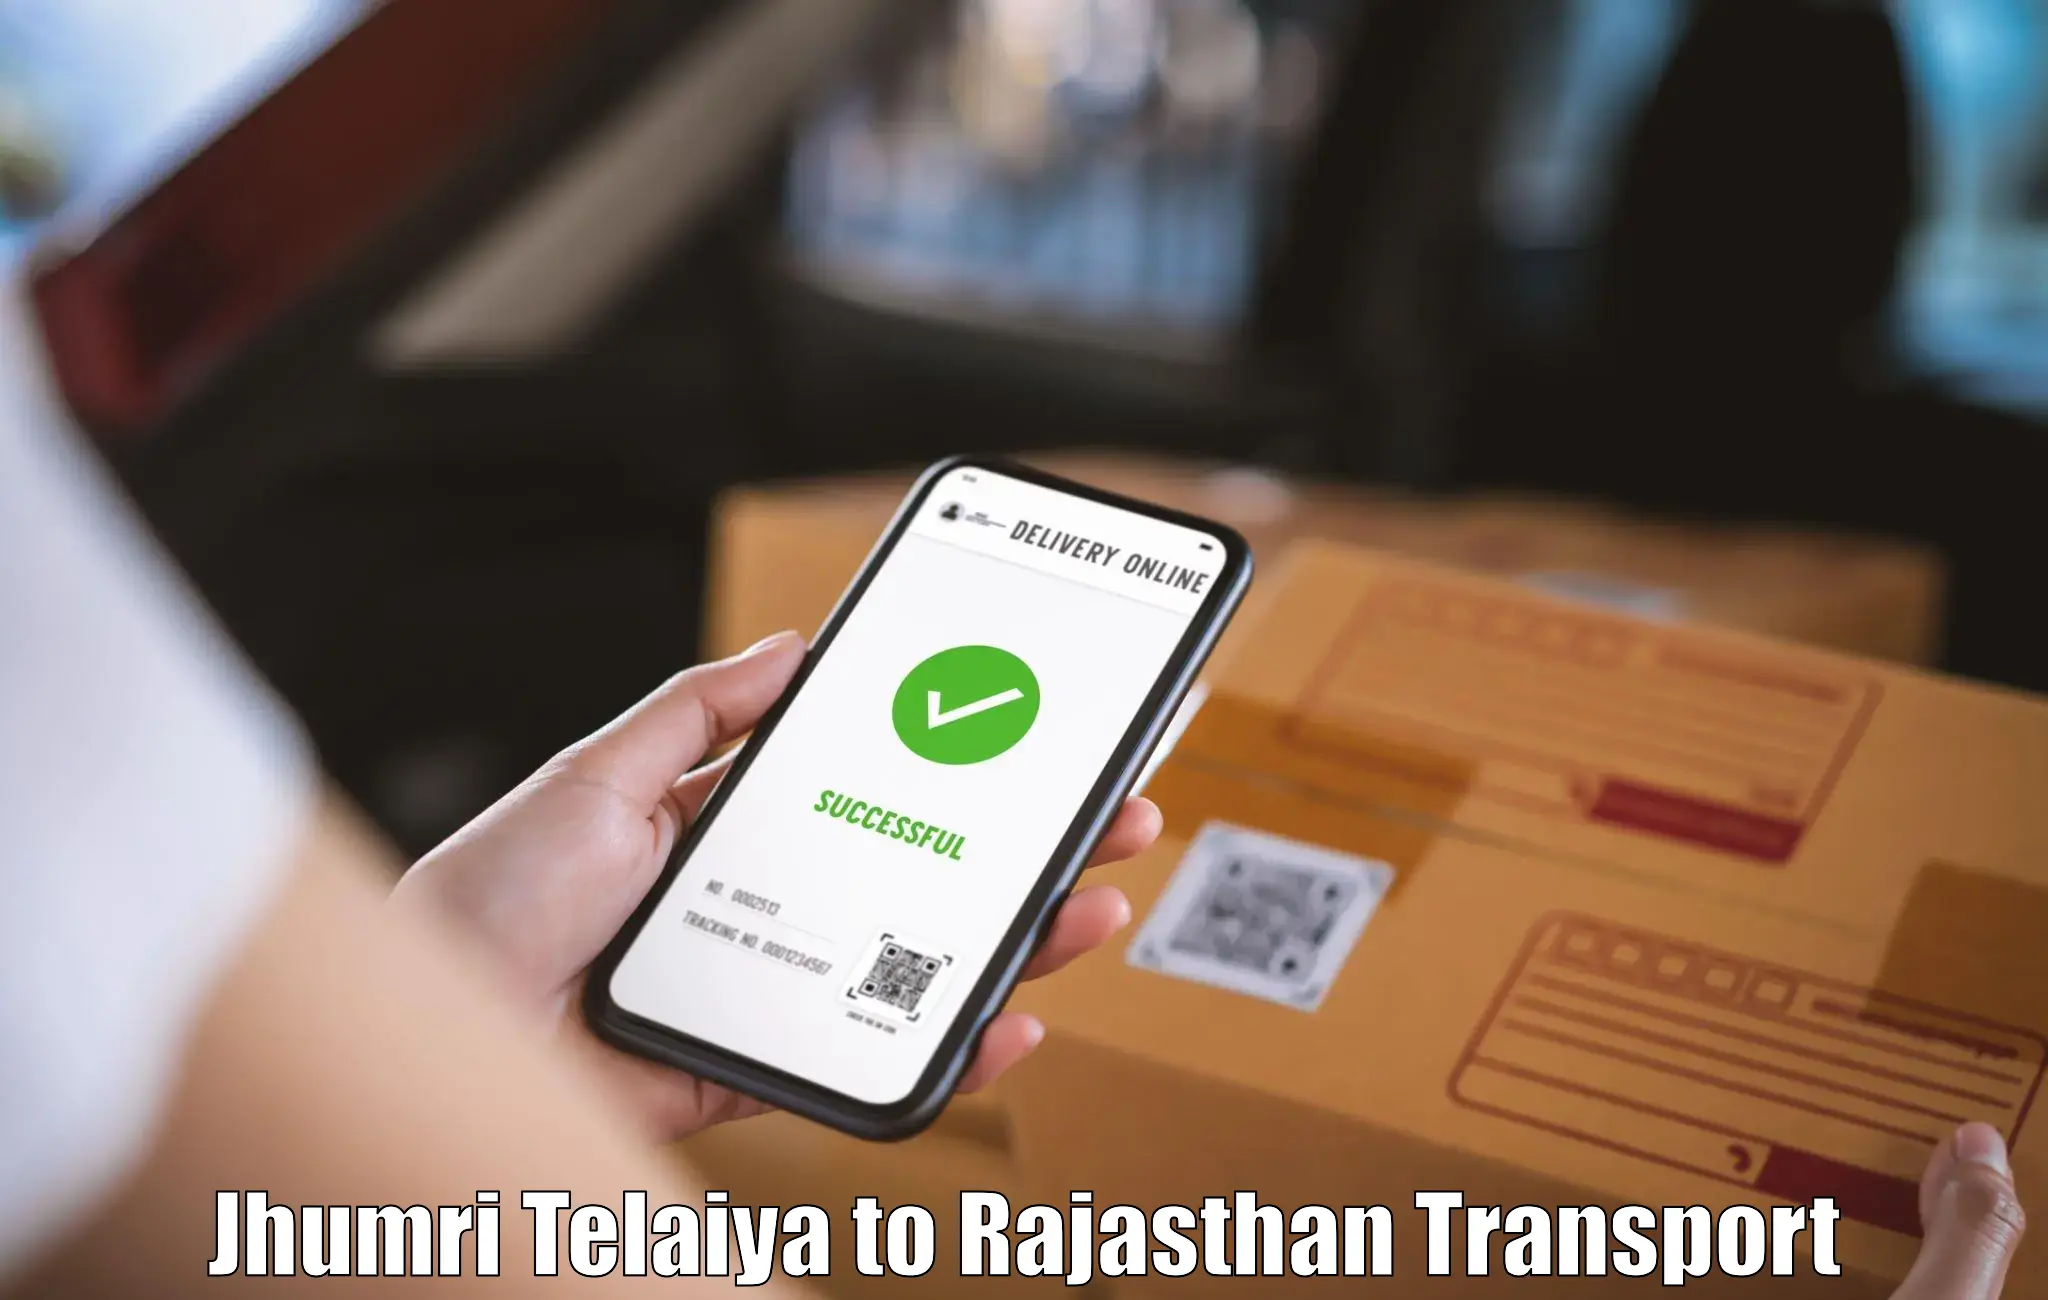 Transportation solution services Jhumri Telaiya to Jawahar Nagar